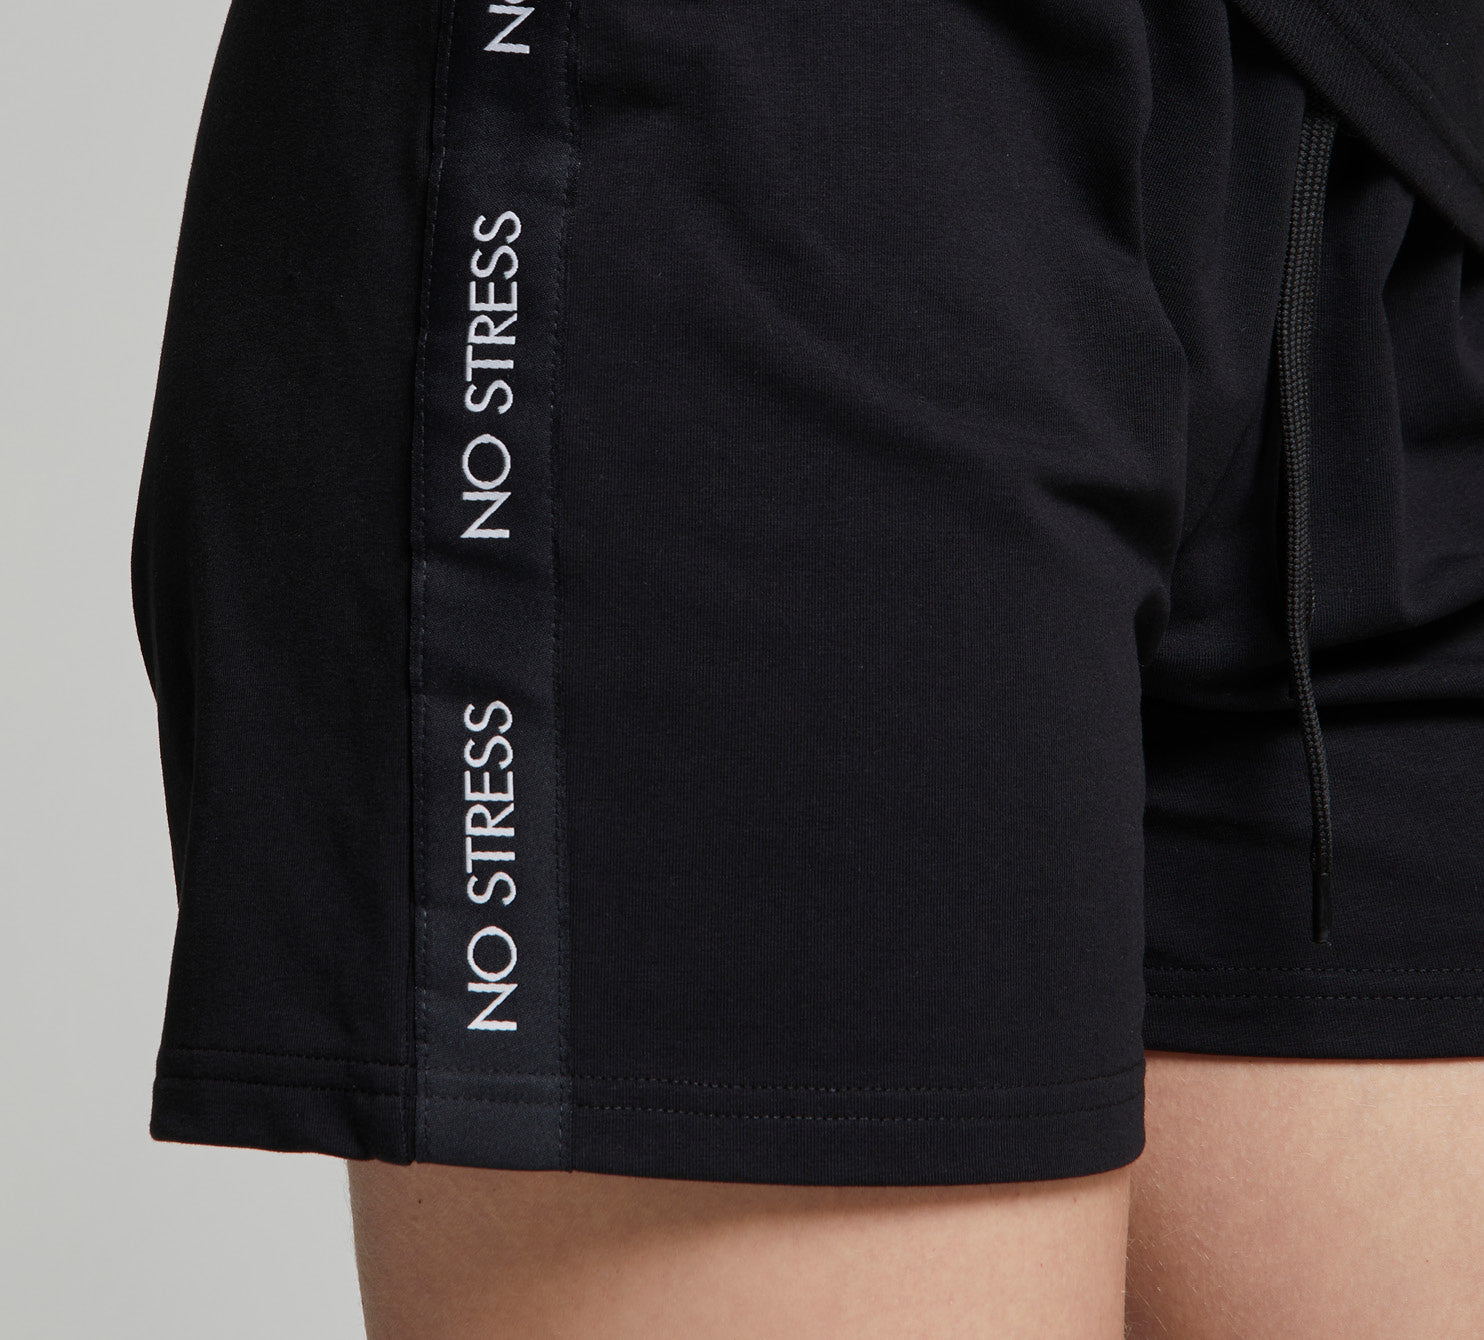 No-stress women’s cotton shorts